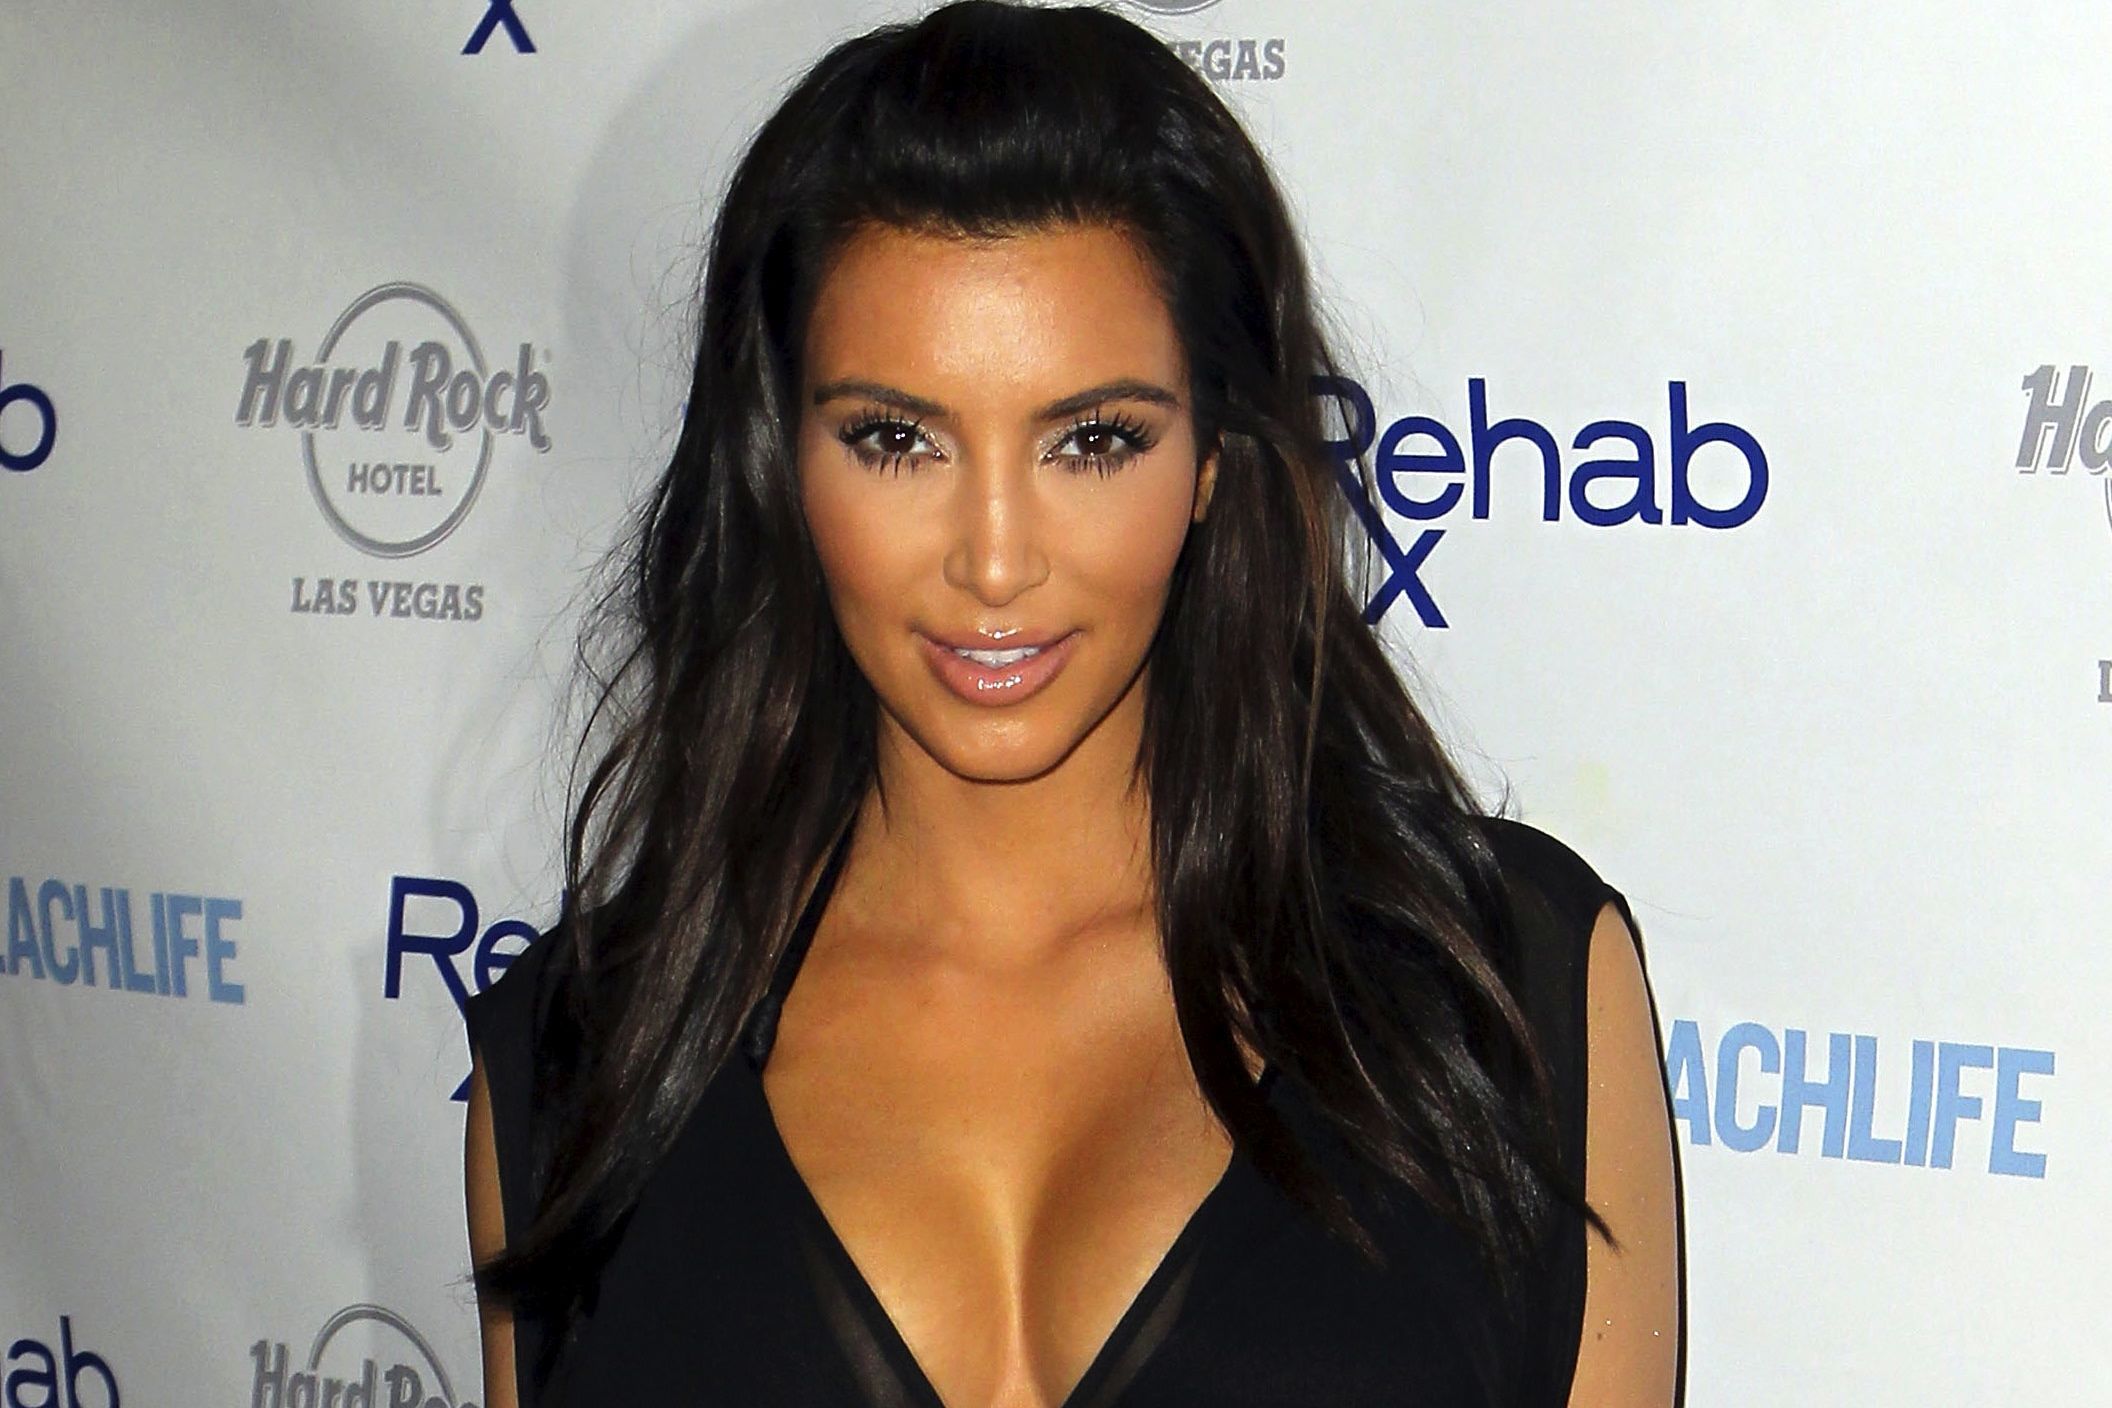 Kim Kardashian Diamond Dust Spray Tan - And Why Not